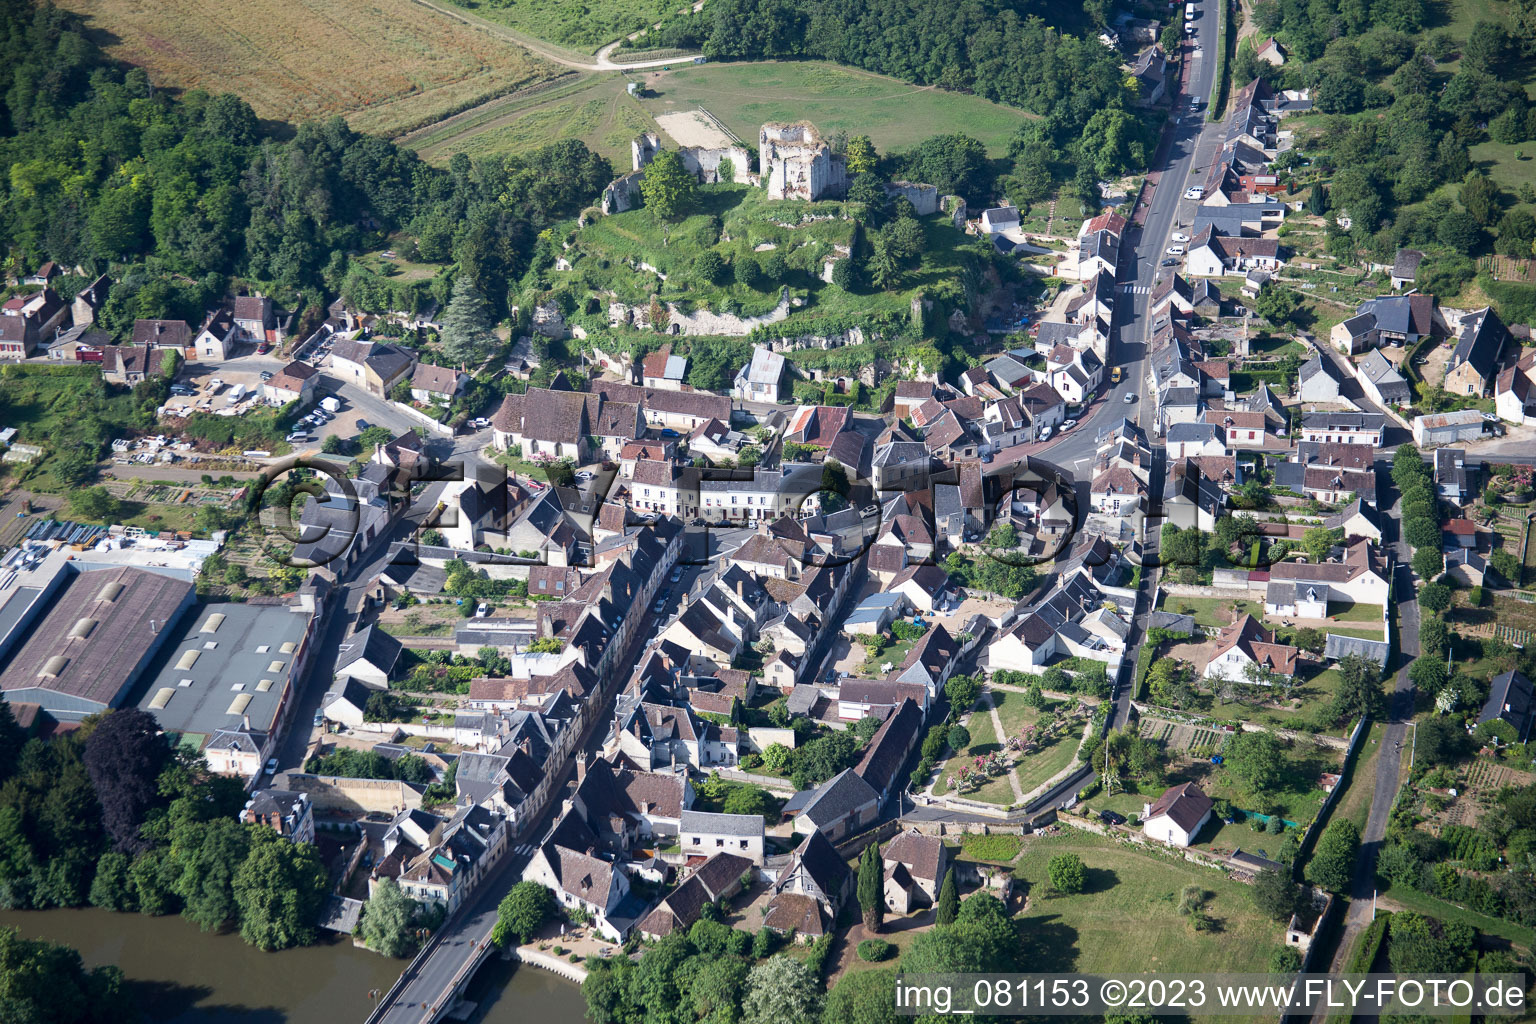 Montoire-sur-le-Loir in the state Loir et Cher, France viewn from the air